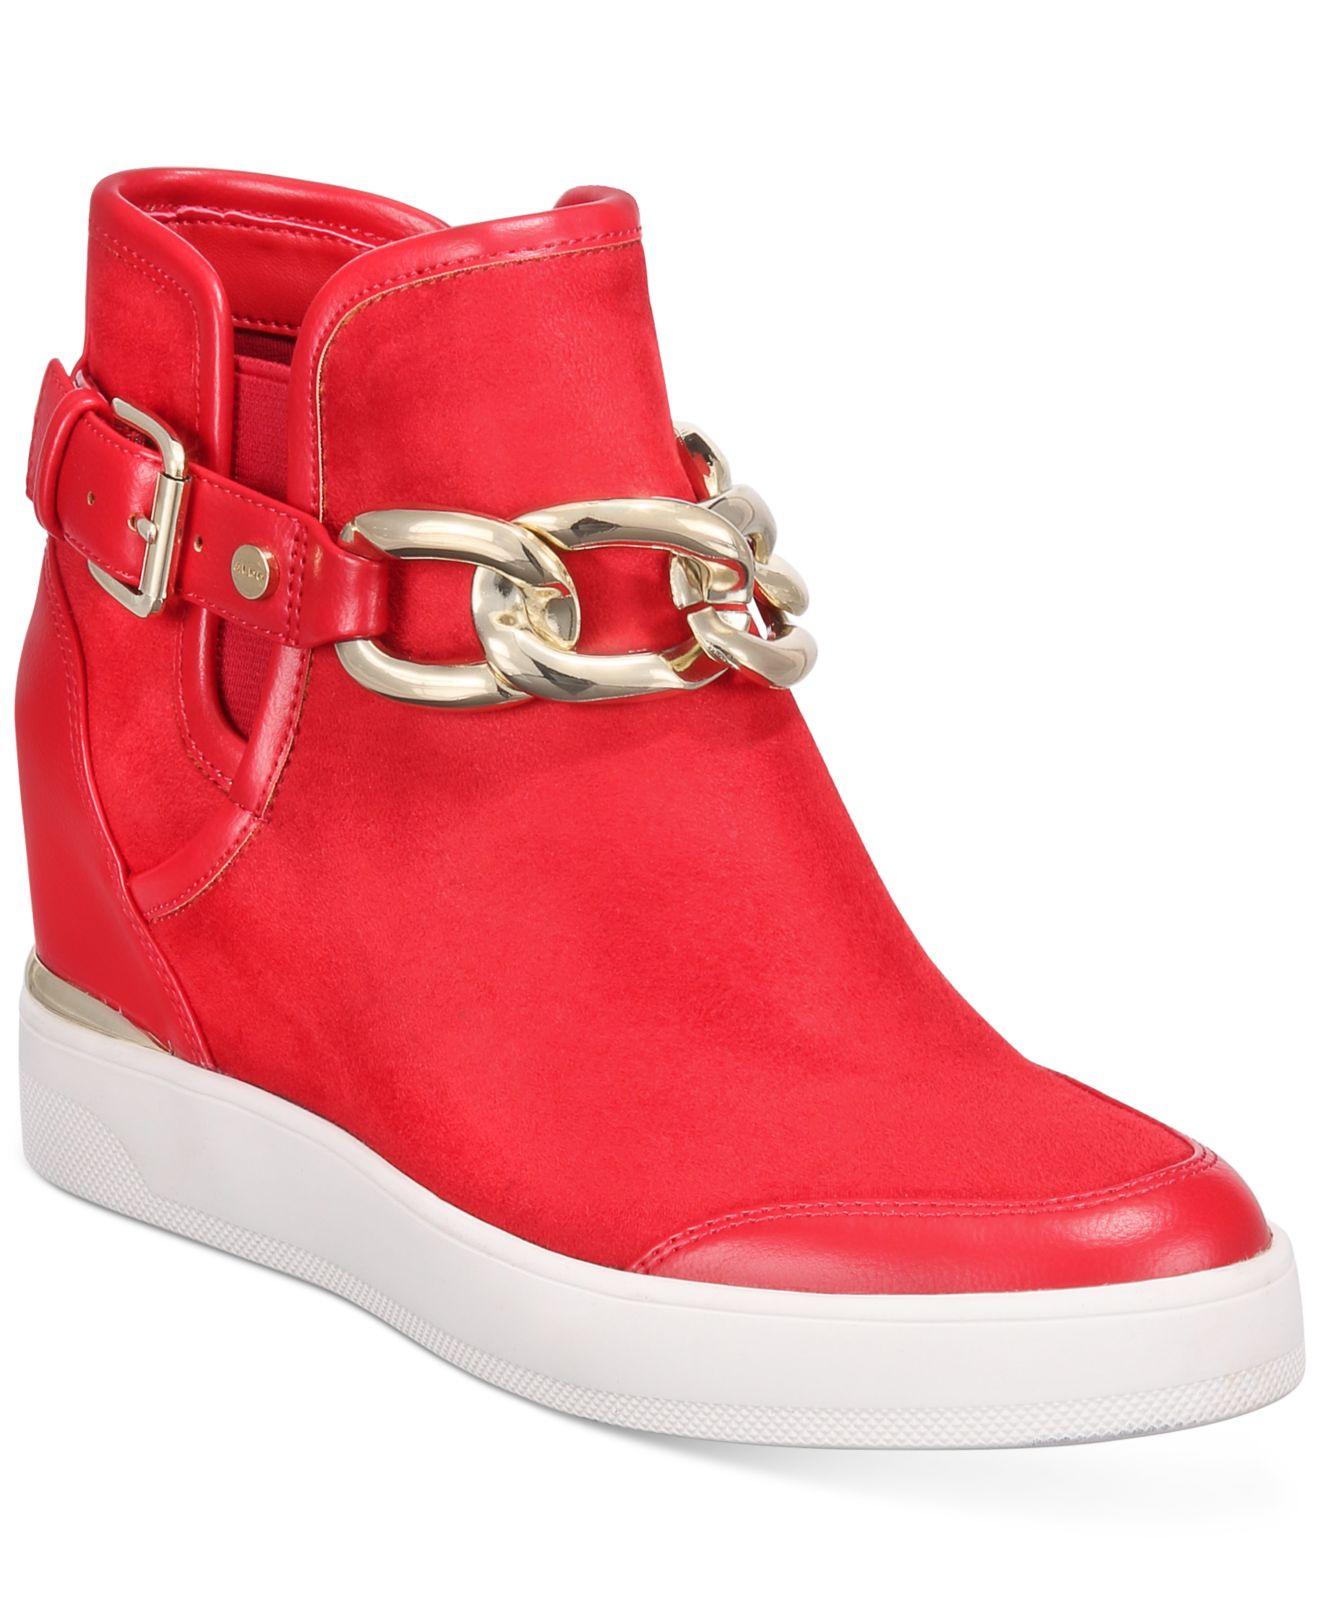 ALDO Micacea Wedge Sneakers in Red | Lyst